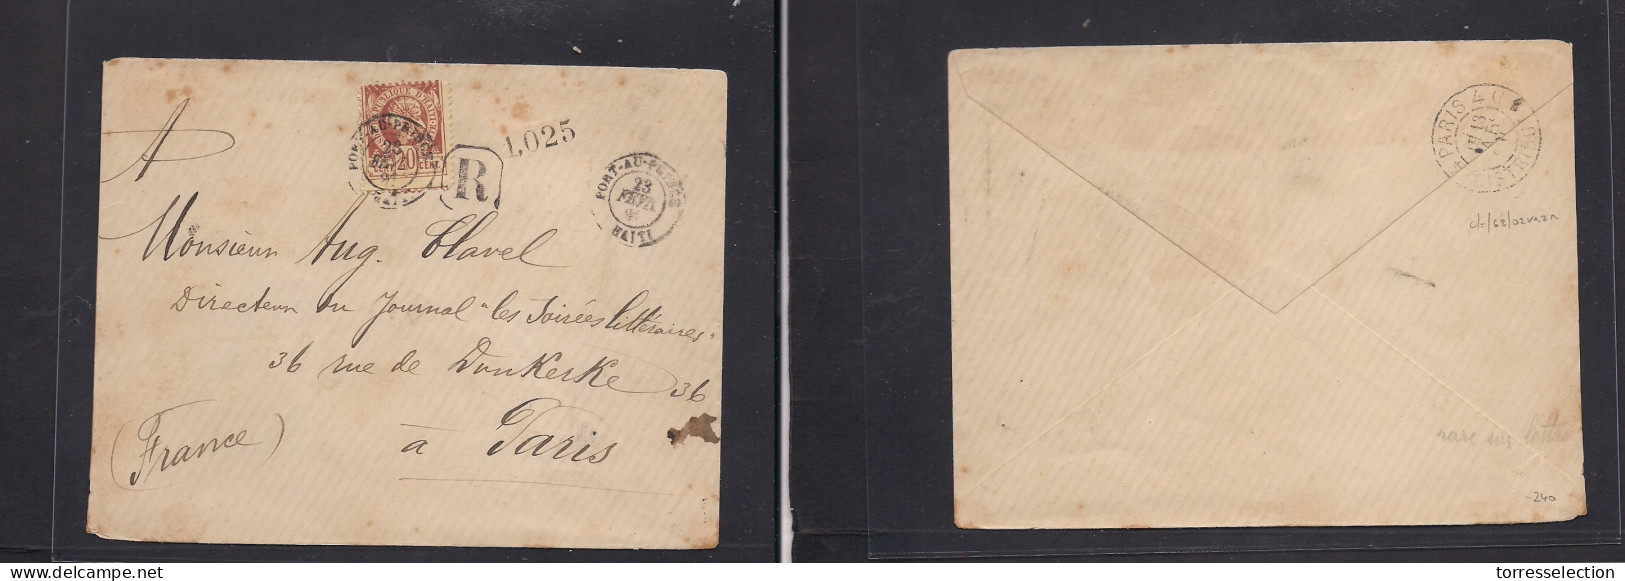 HAITI. 1891 (23 Febr) Port Prince - Paris, France (13 March) Registered Single 20c Perf Fkd Env, Tied Cds + R-cachet. Fi - Haïti